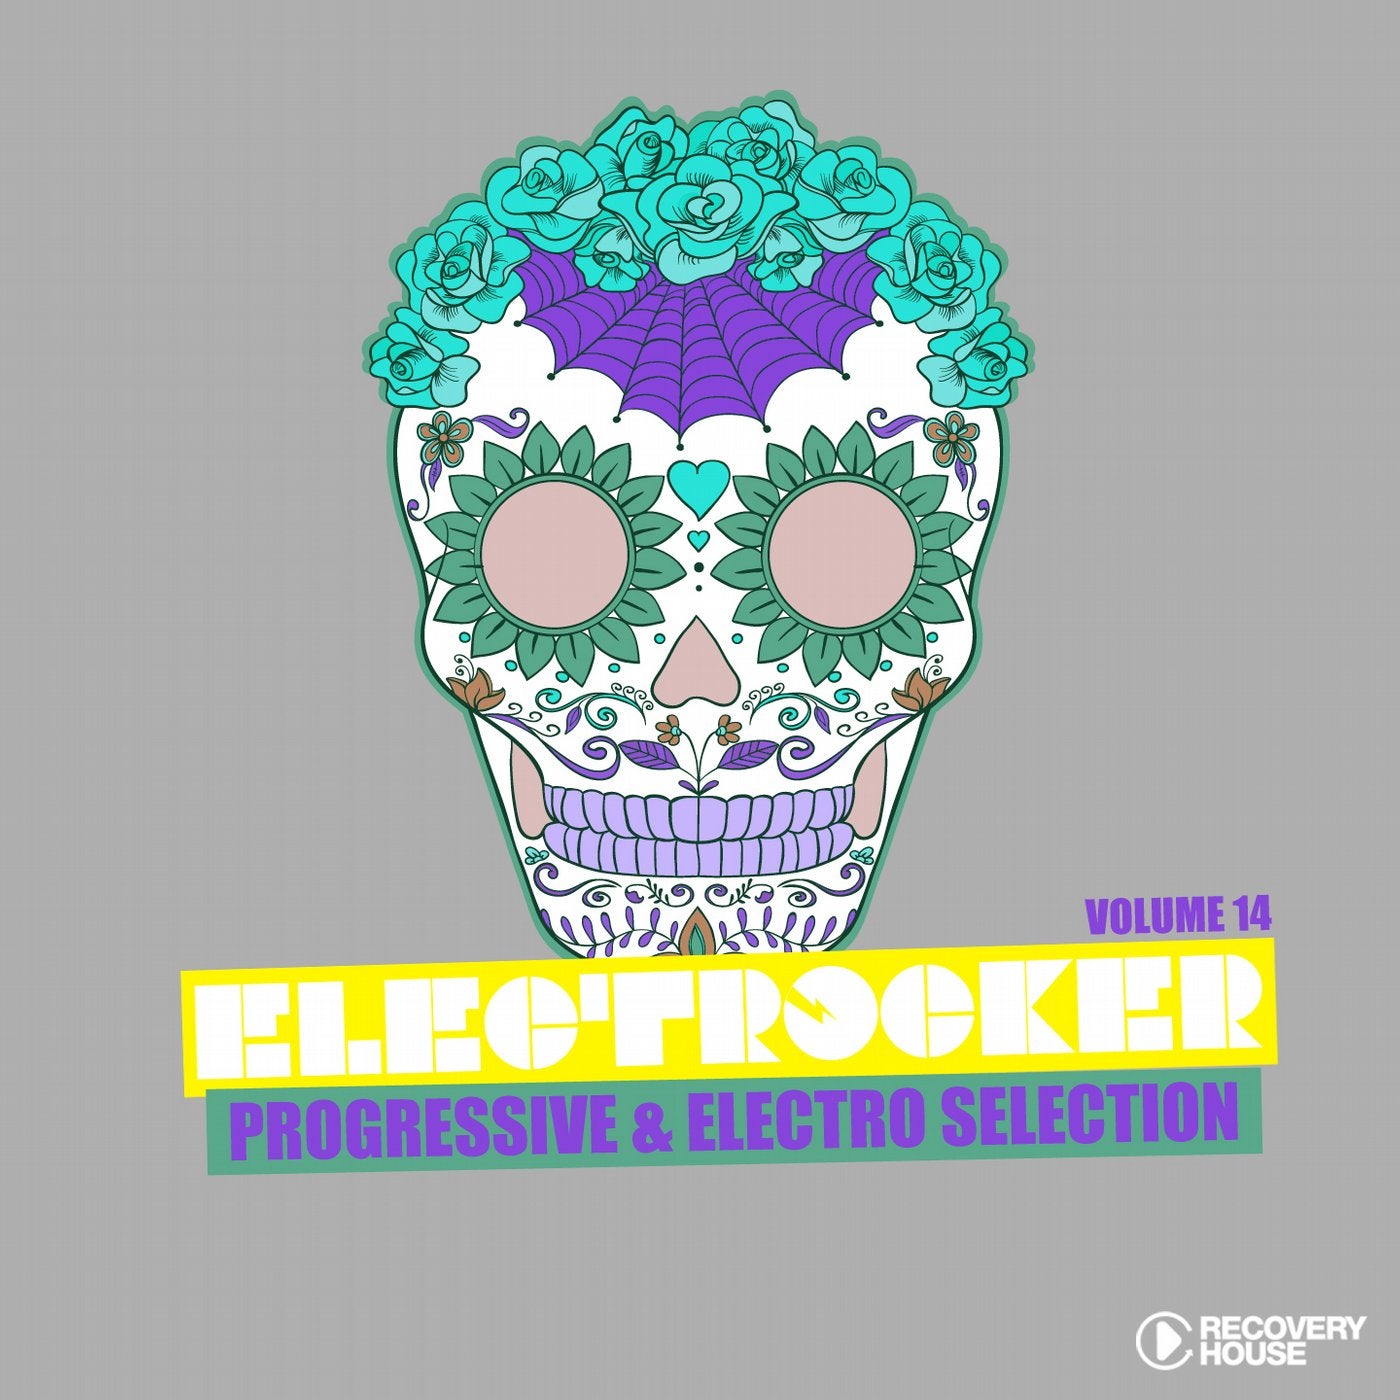 Electrocker - Progressive & Electro Selection Vol. 14